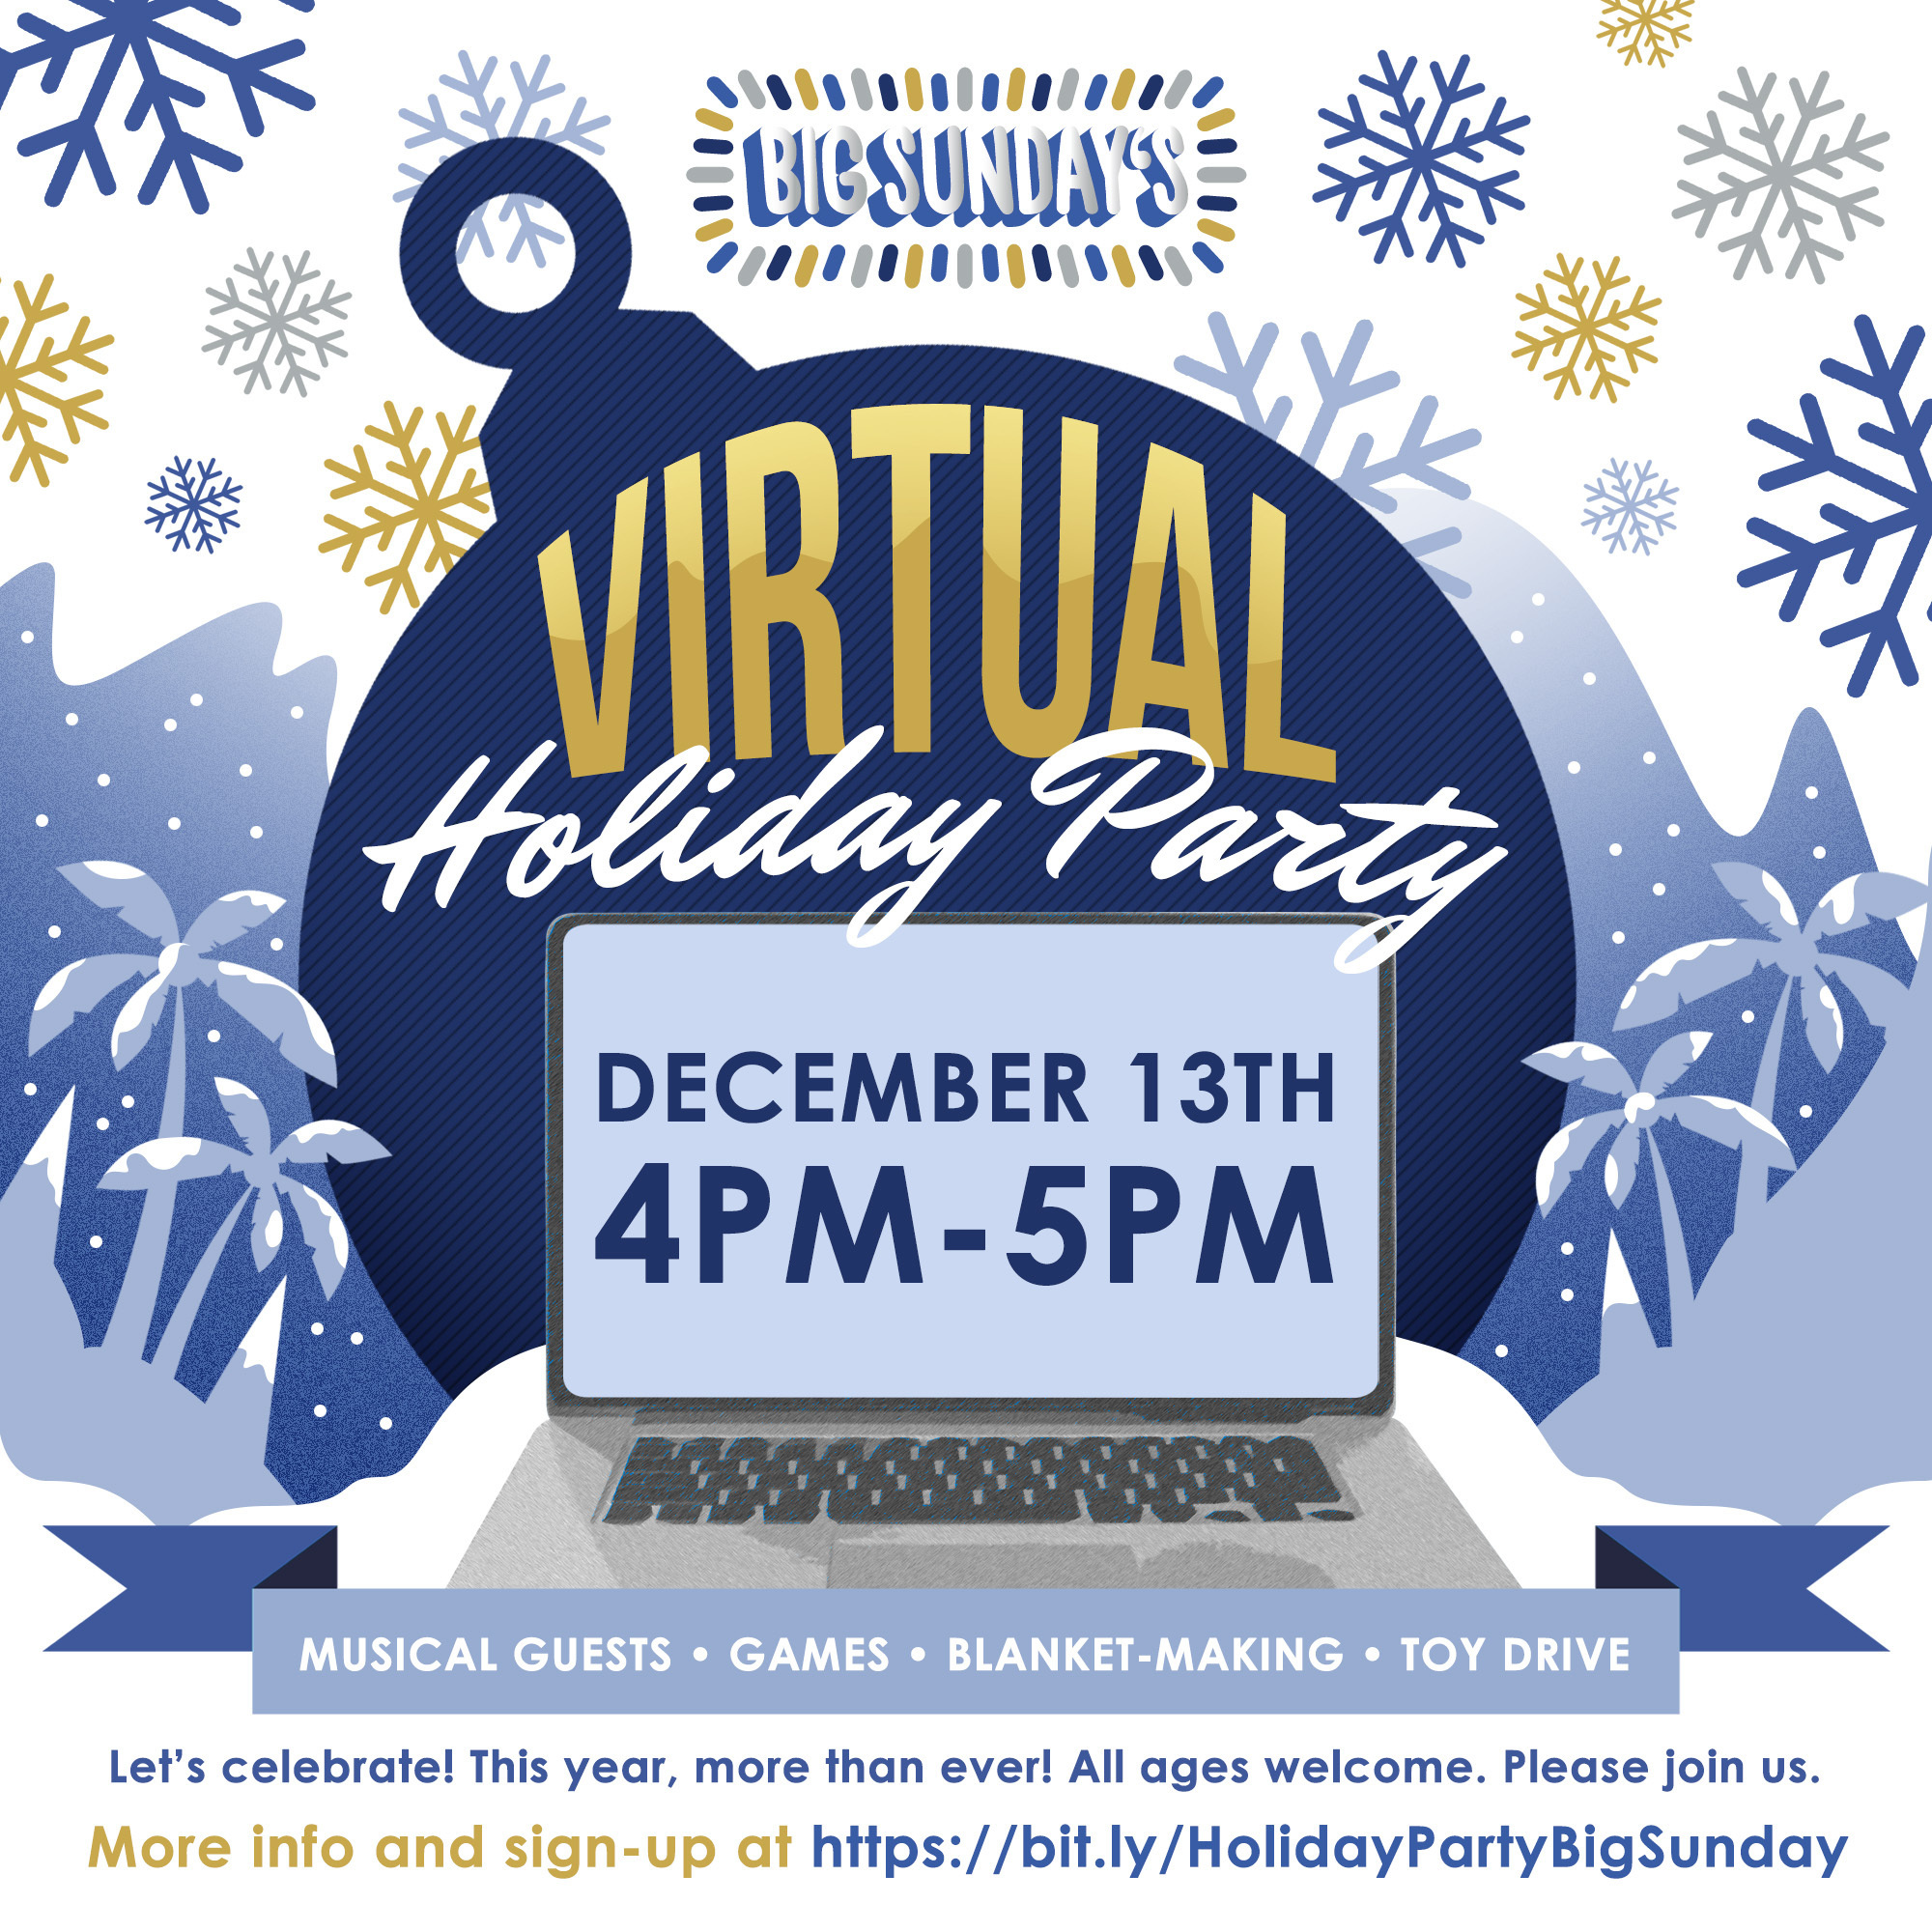 Big Sunday's Virtual Holiday Party